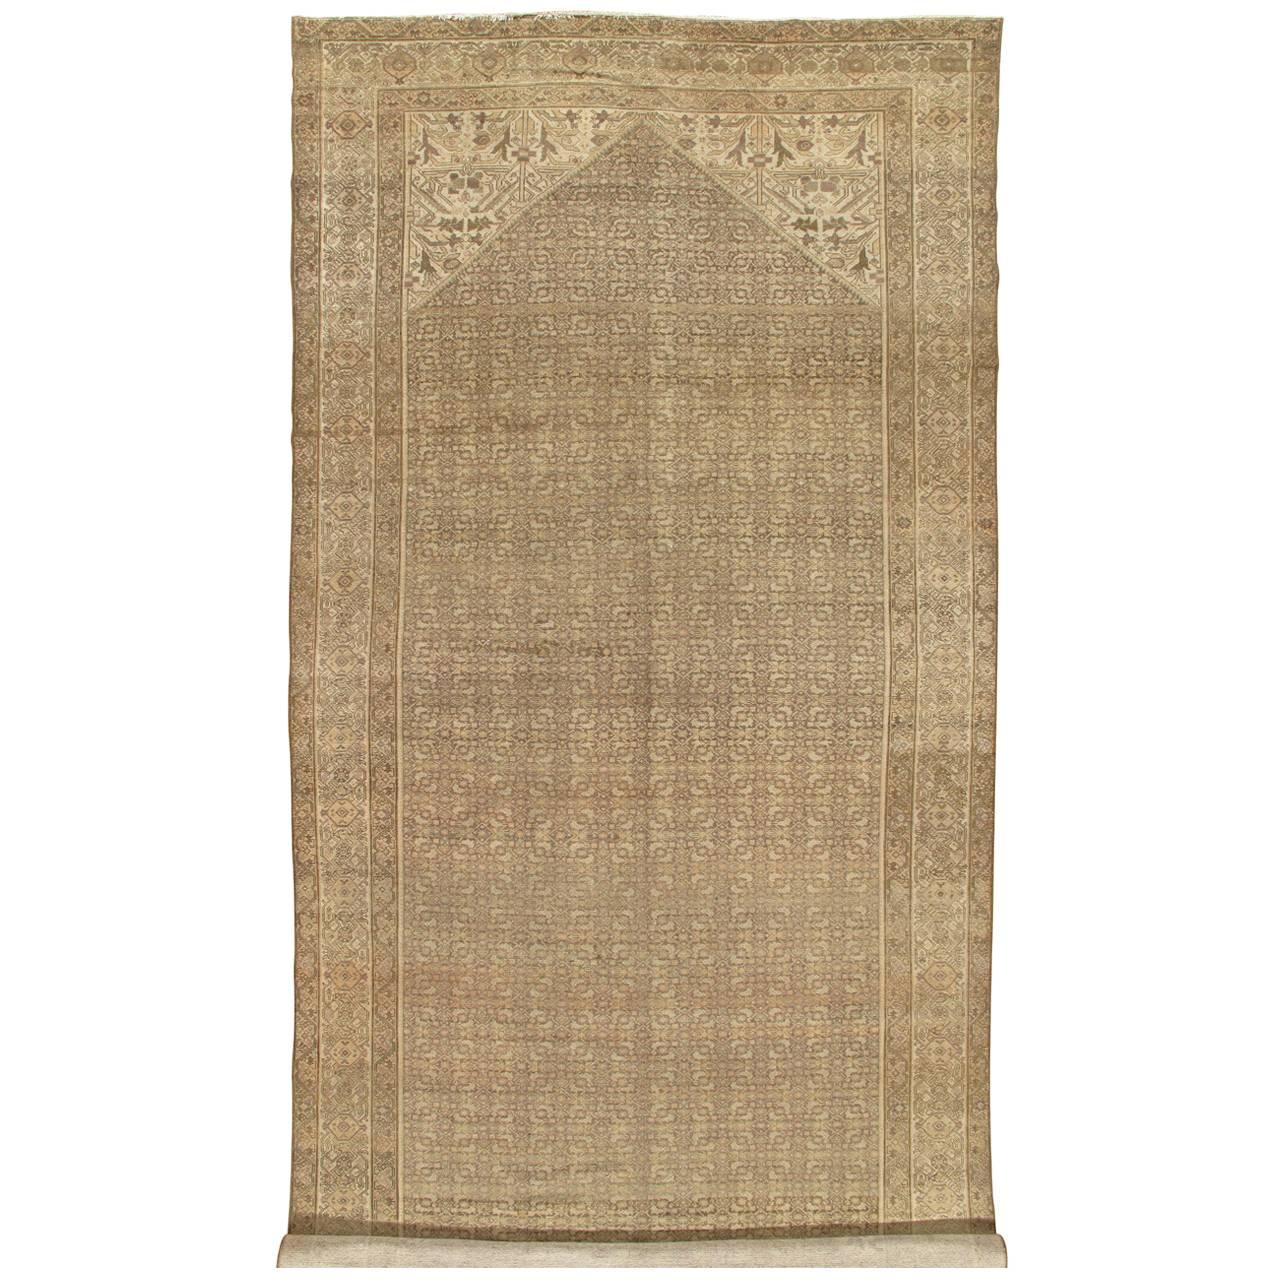 Antique Malayer Carpet, Handmade Oriental Rug, Ivory, Taupe, Gray, Light Brown